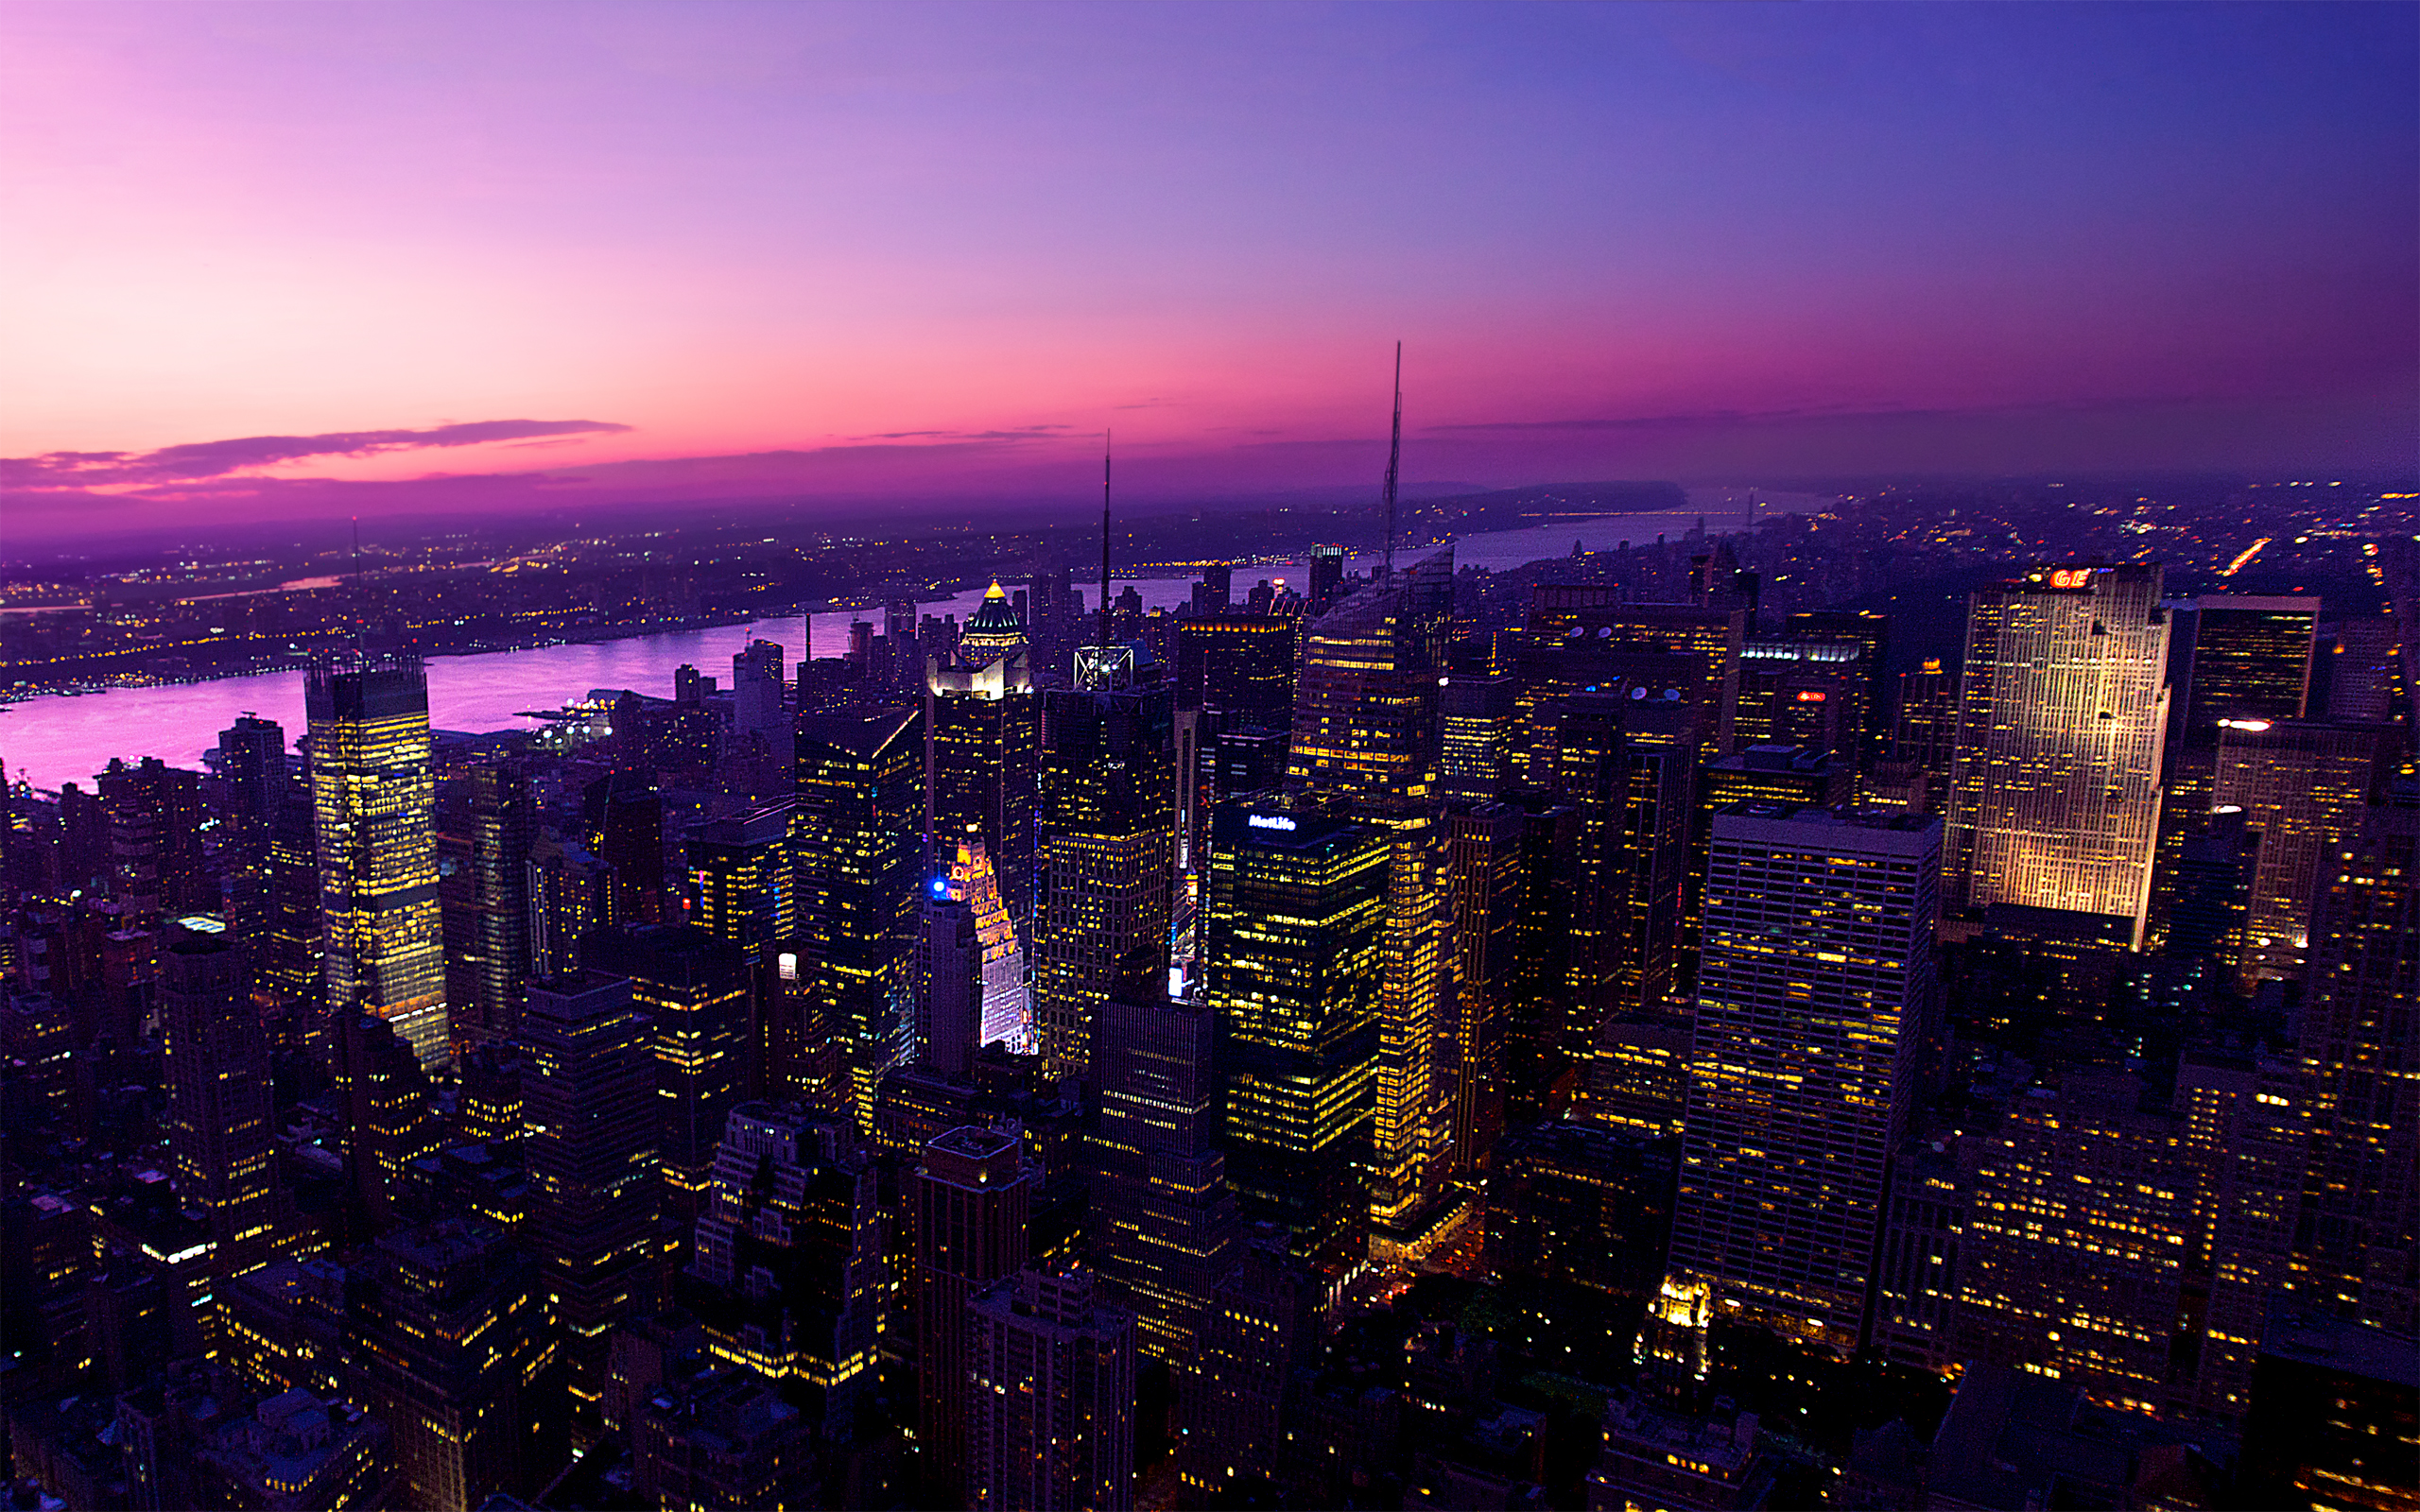 Twilight in New York City159253630 - Twilight in New York City - York, Twilight, Colors.jpeg, City